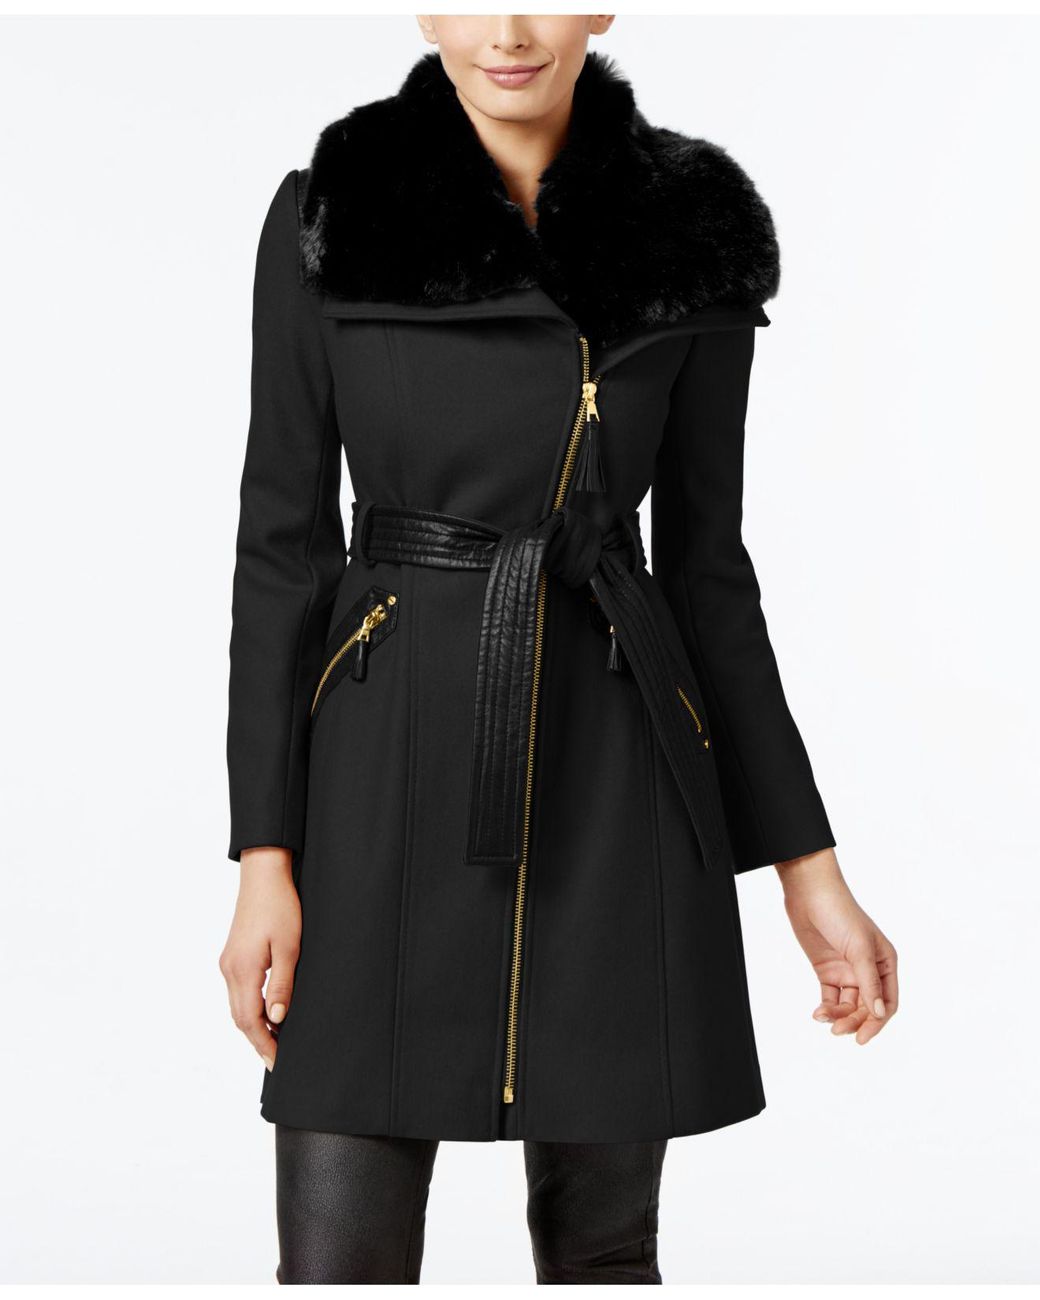 Lyst - Via Spiga Kate Faux-fur-collar Mixed-media Coat in Black - Save ...